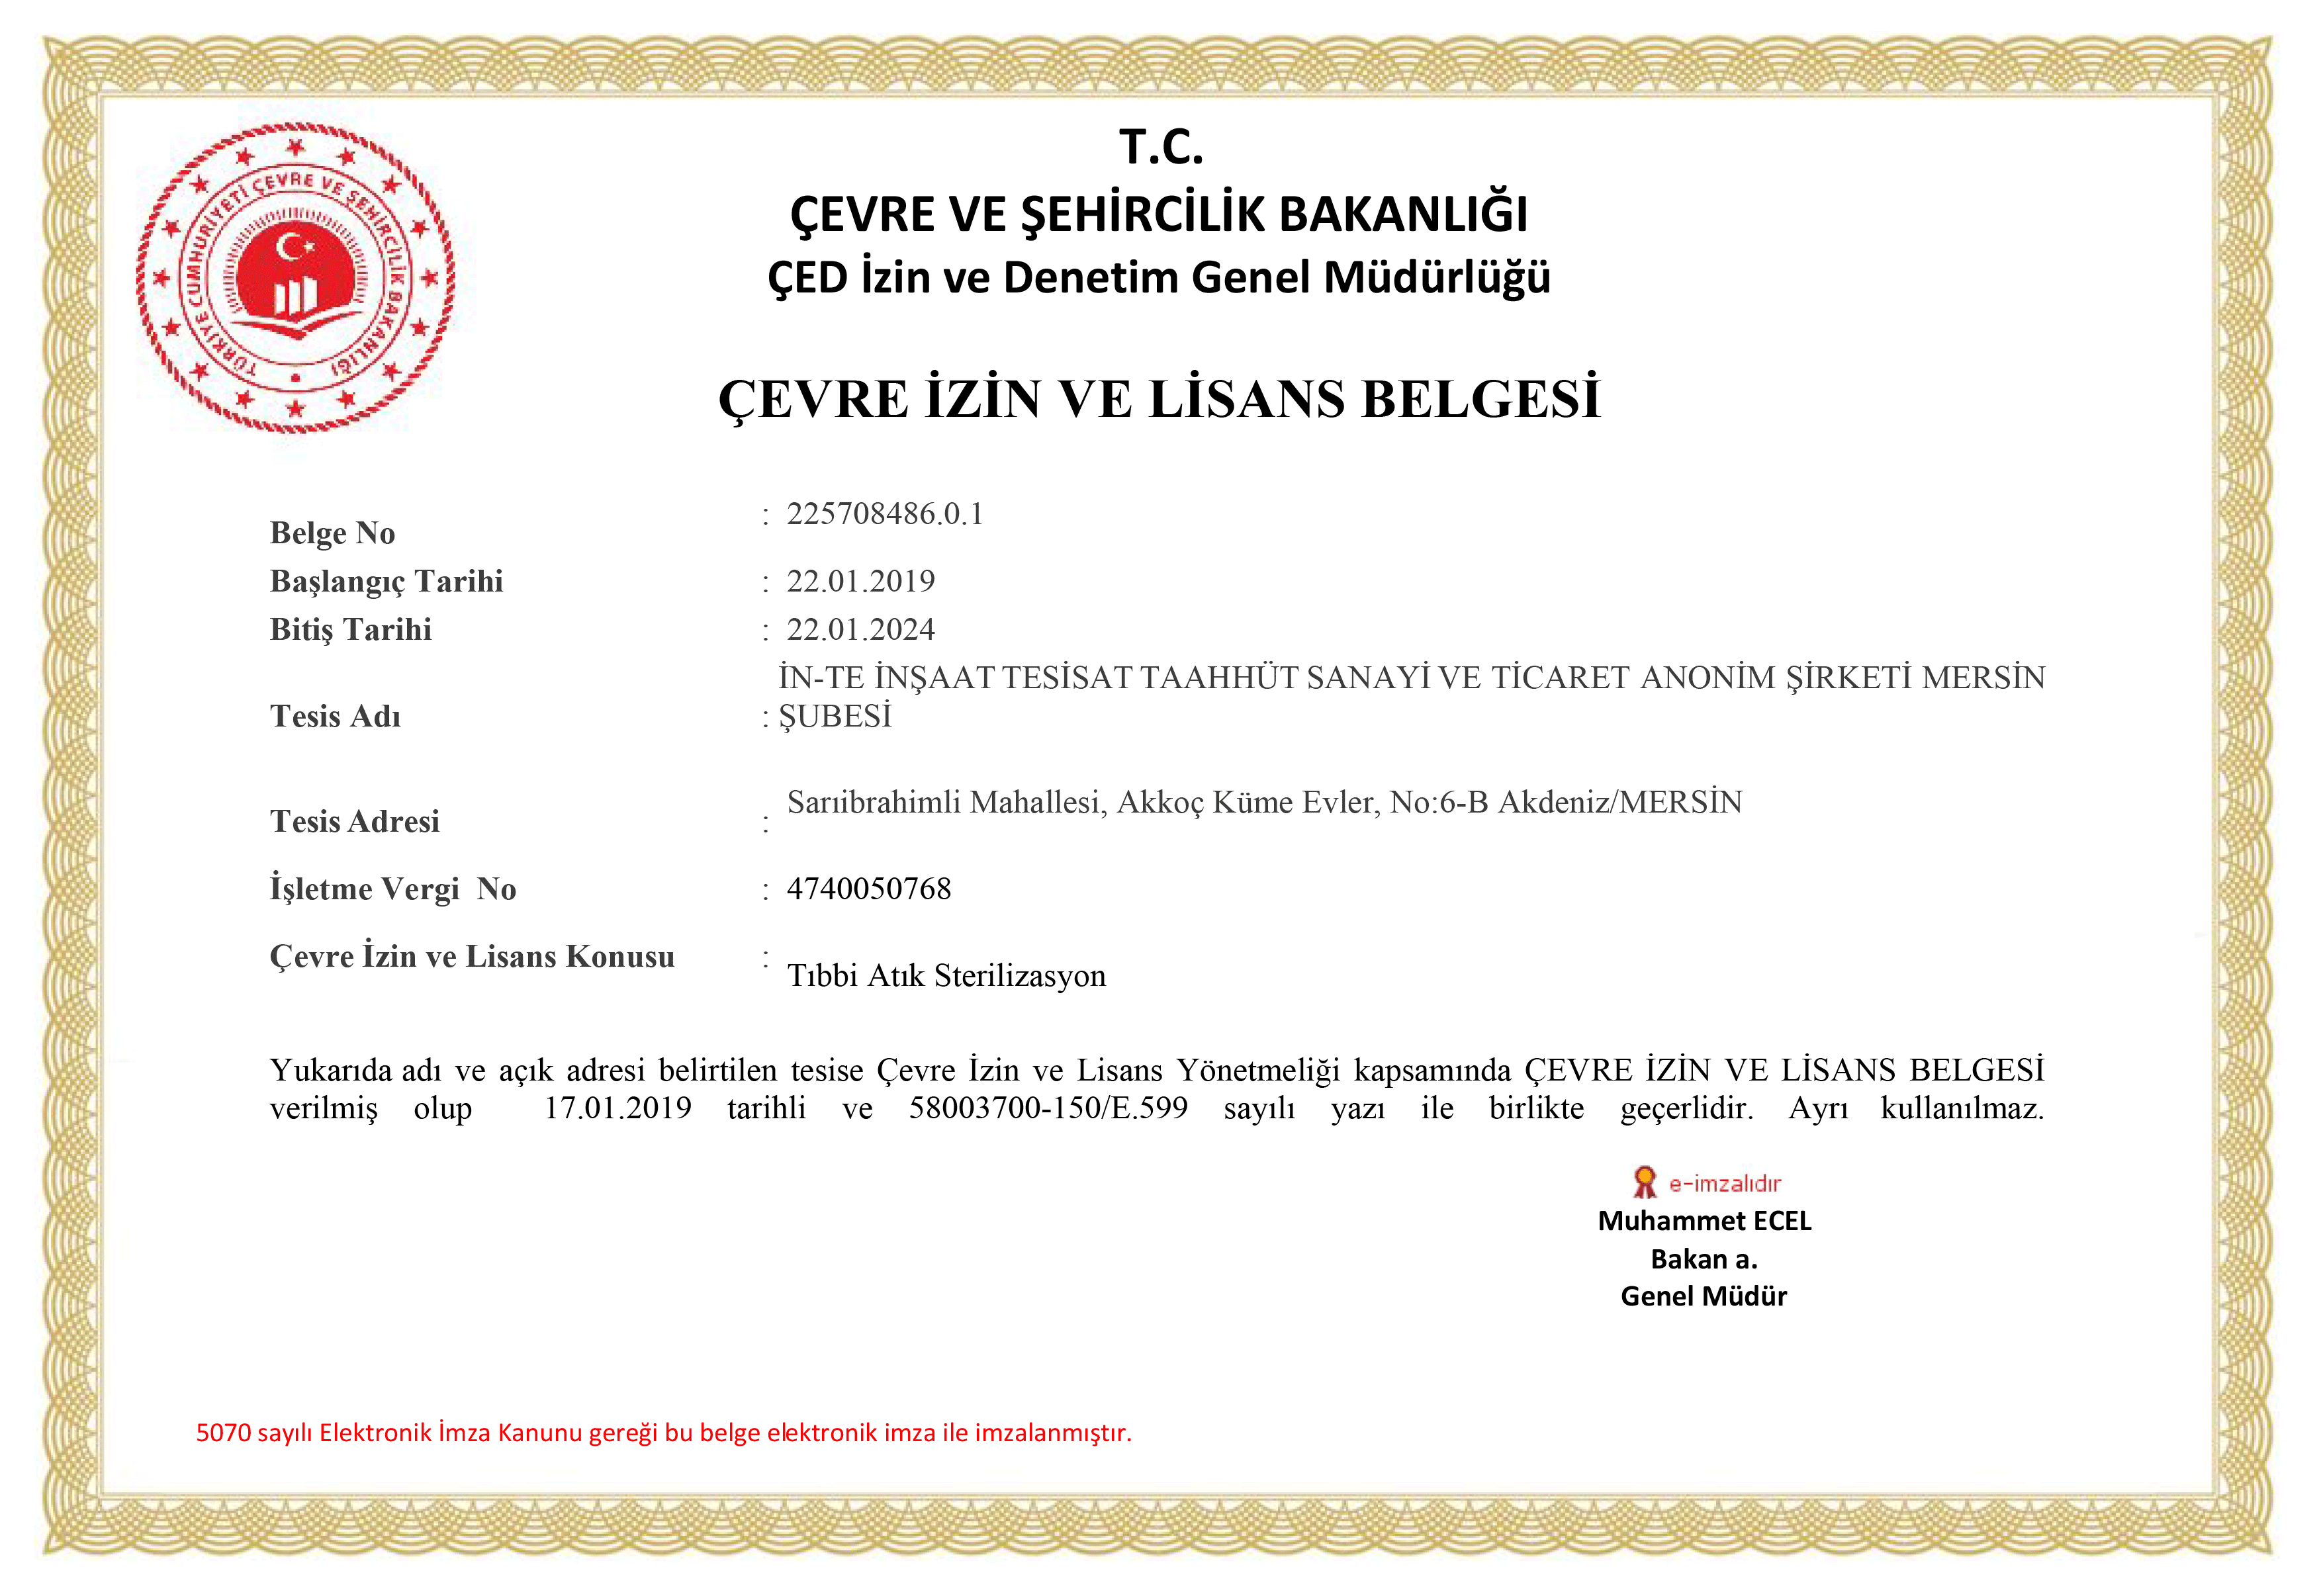 Mersin çevre izin ve Lisans belgesi